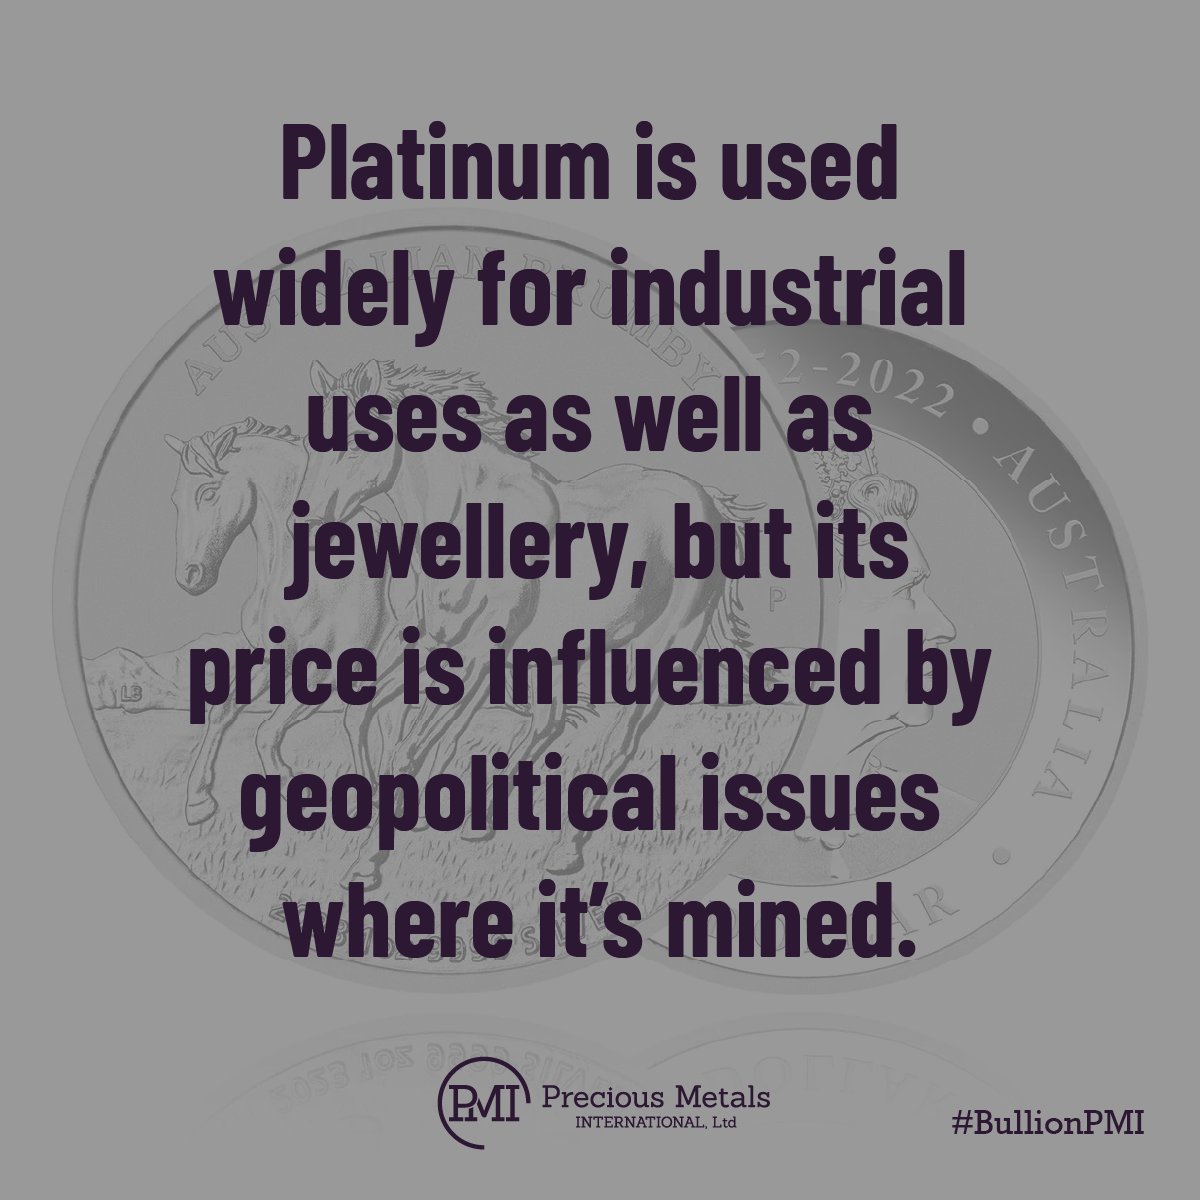 #BullionPMI #Platinum #PlatinumBullion #PlatinumJewellery #PlatinumPrices #PlatinumMining #Geopolitics #PlatinumForIndustry ⬜️🔘◻️⛏️🛻🇿🇦🇷🇺🇵🇪🇲🇽